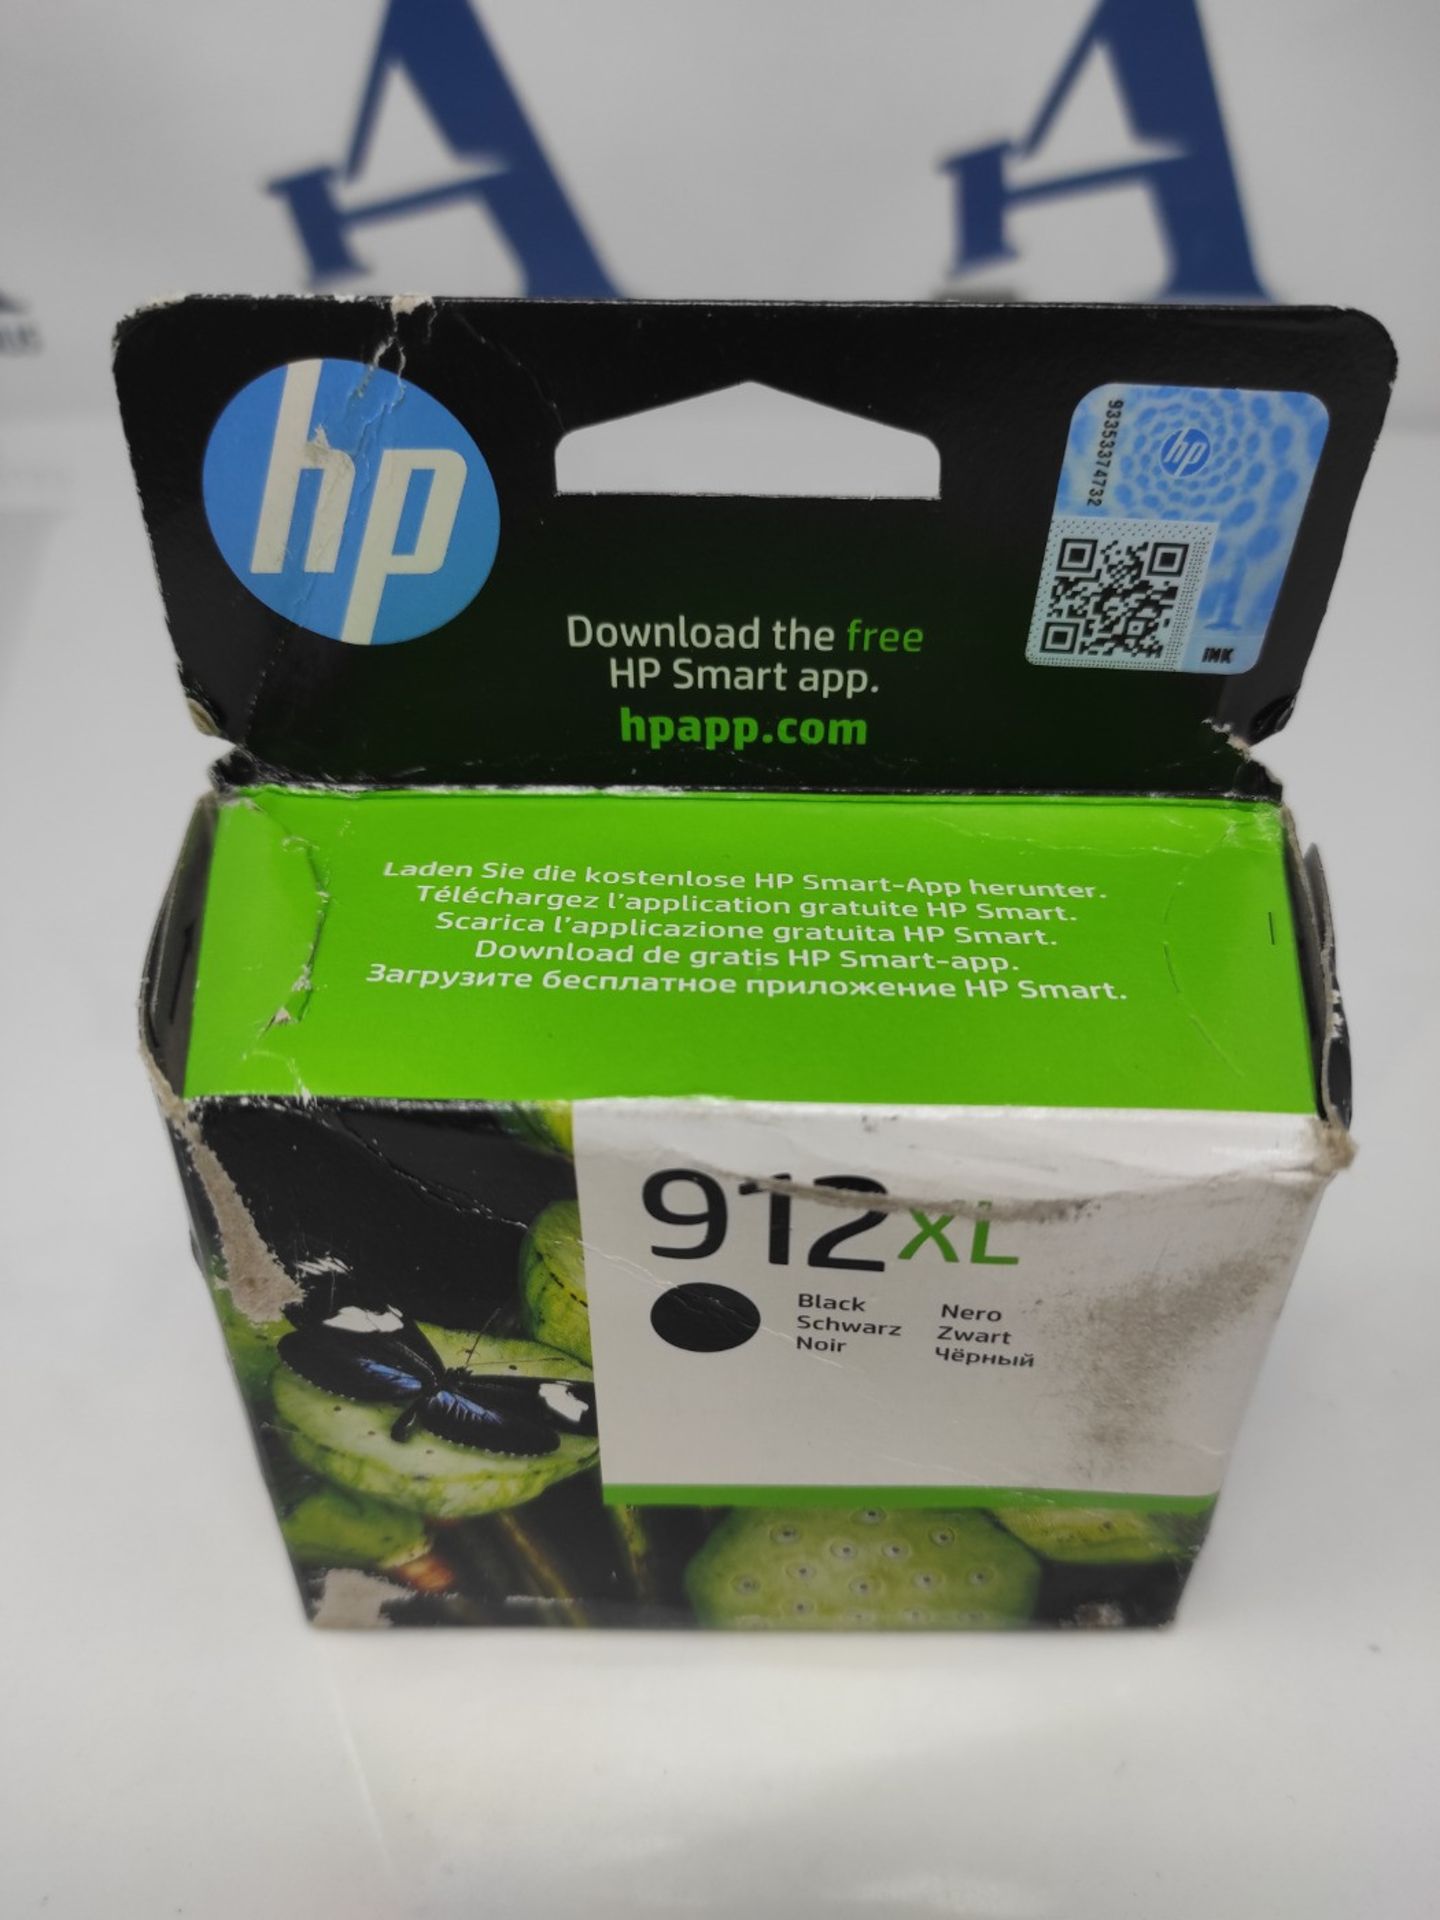 [NEW] HP 912XL (3YL84AE) Original high yield black printer cartridge for HP OfficeJet - Image 2 of 2